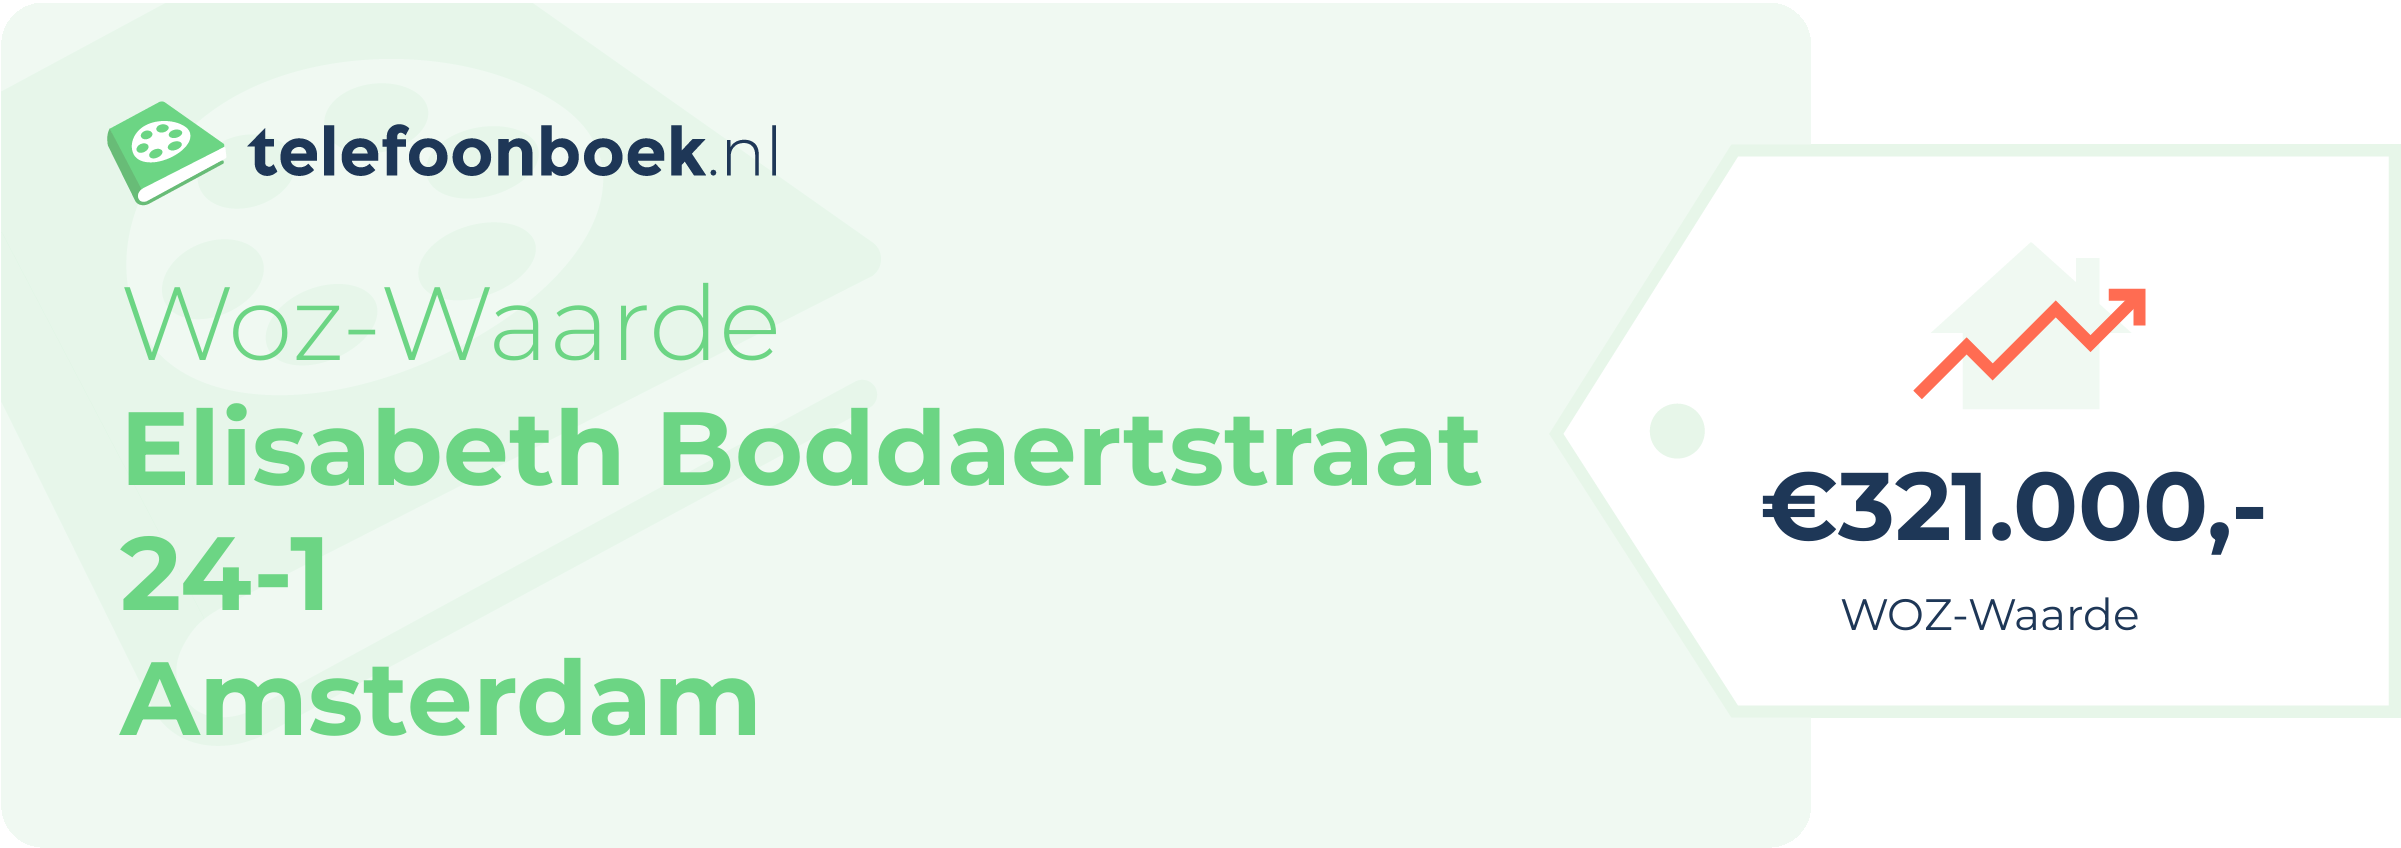 WOZ-waarde Elisabeth Boddaertstraat 24-1 Amsterdam